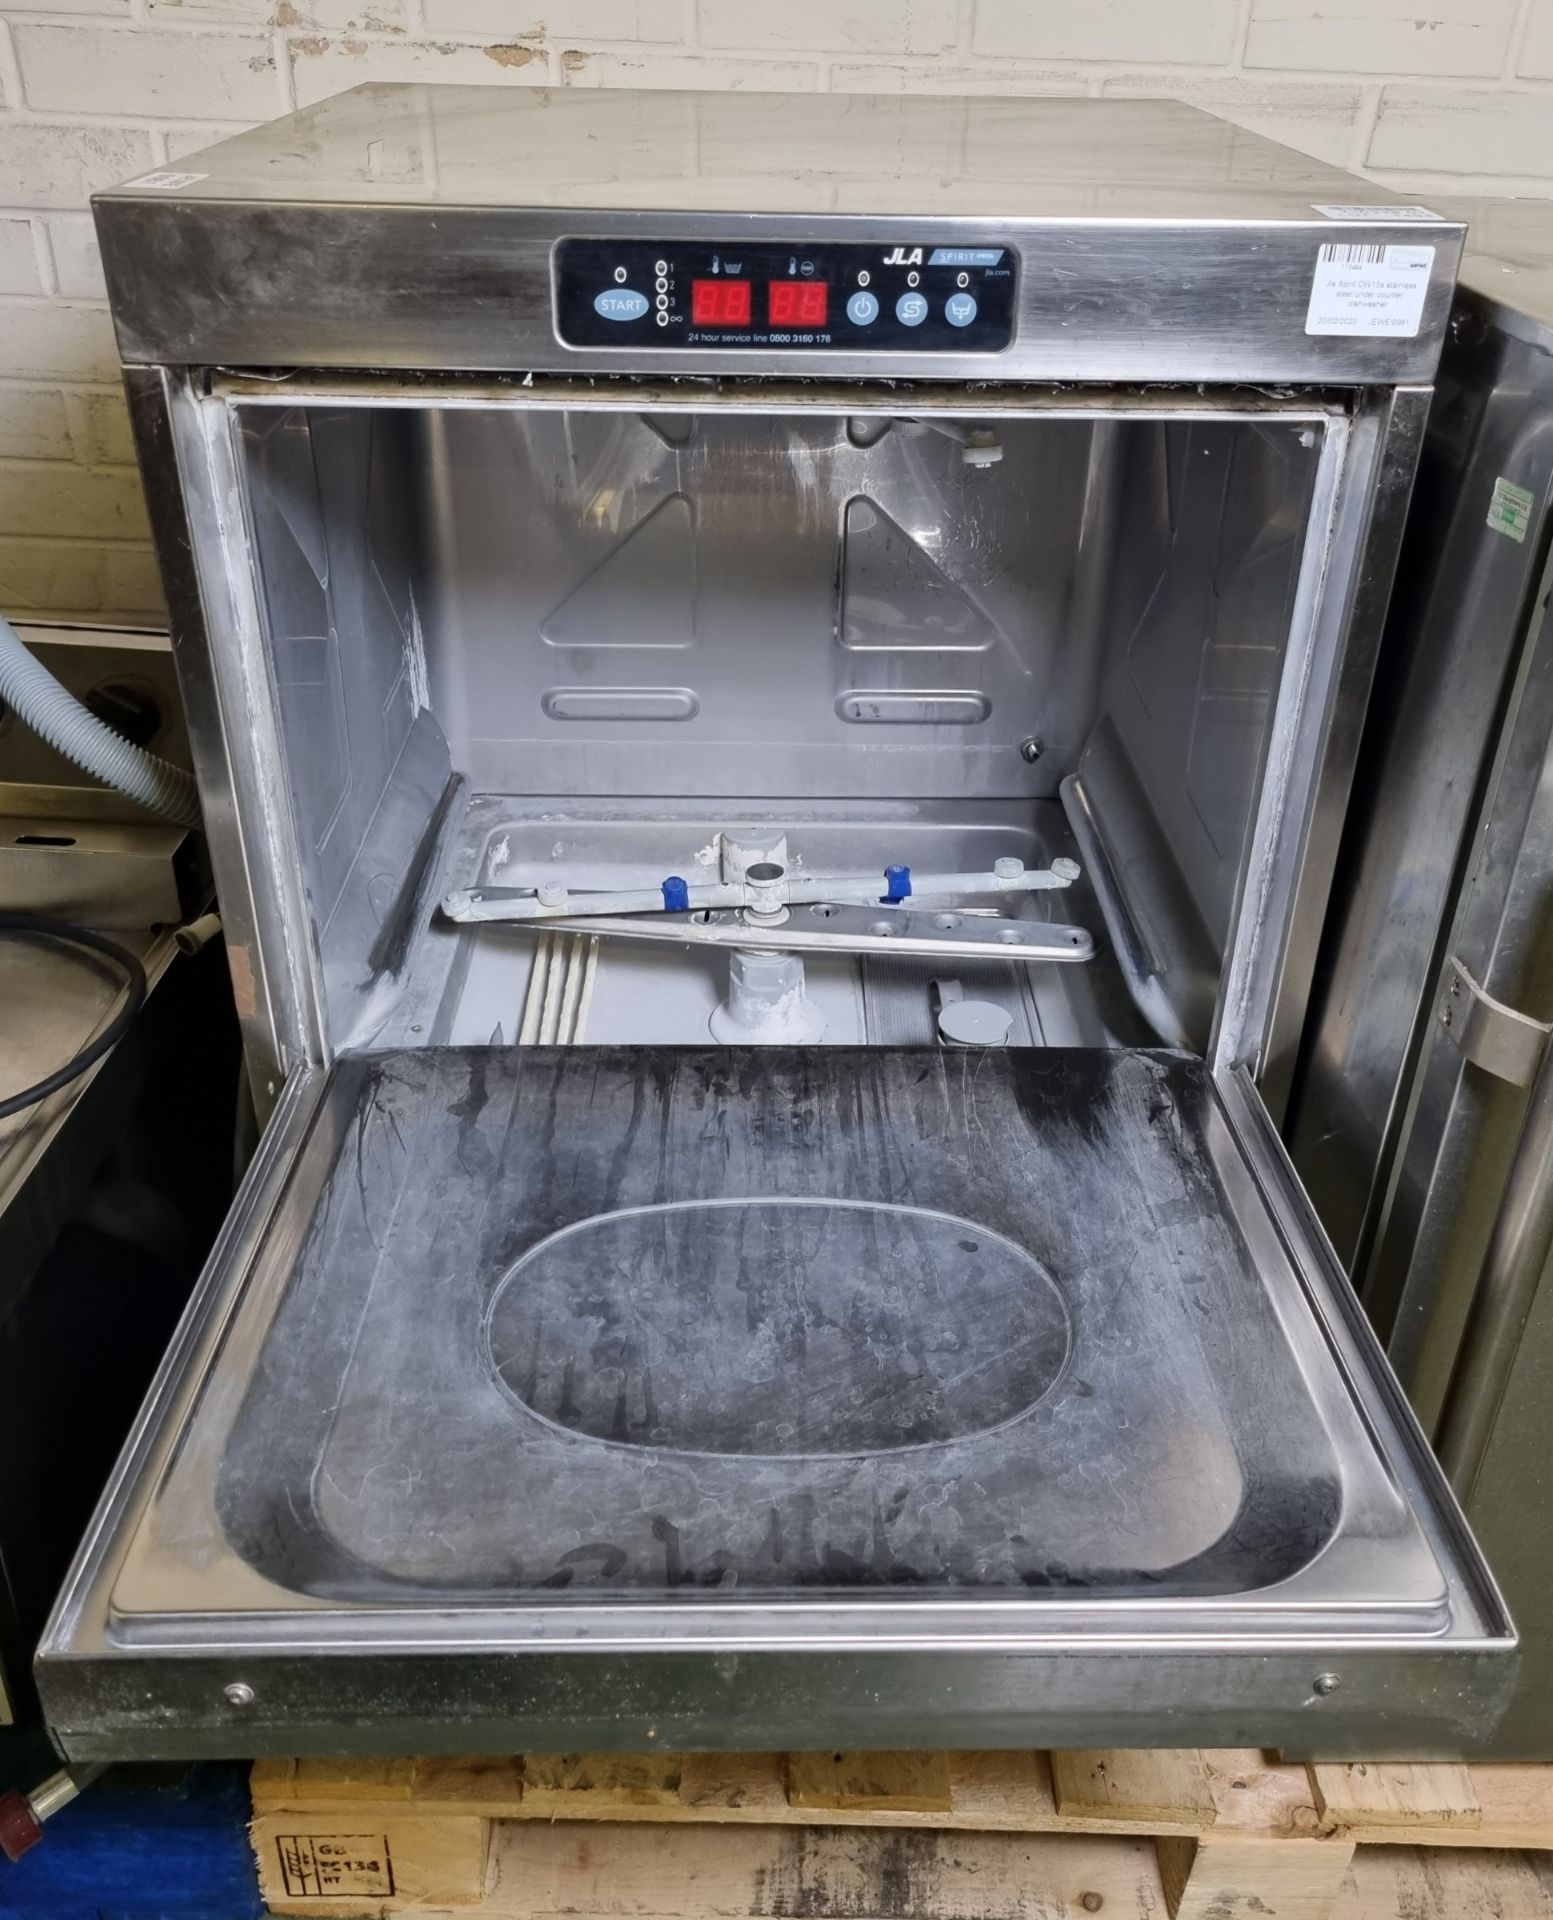 Jla Spirit DW15s stainless steel under counter dishwasher - 600mm W - Image 3 of 4